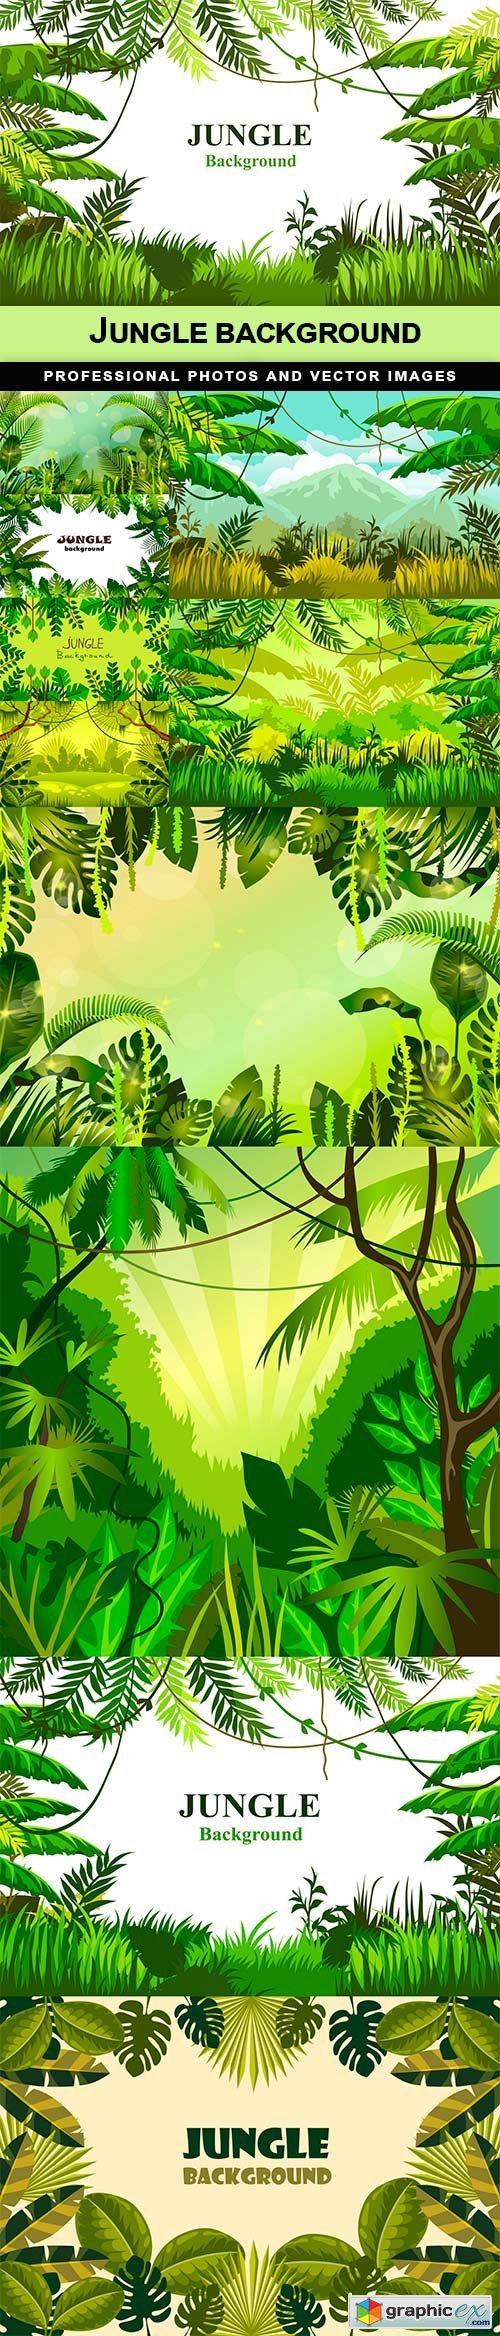 Jungle background - 10 UHQ JPEG